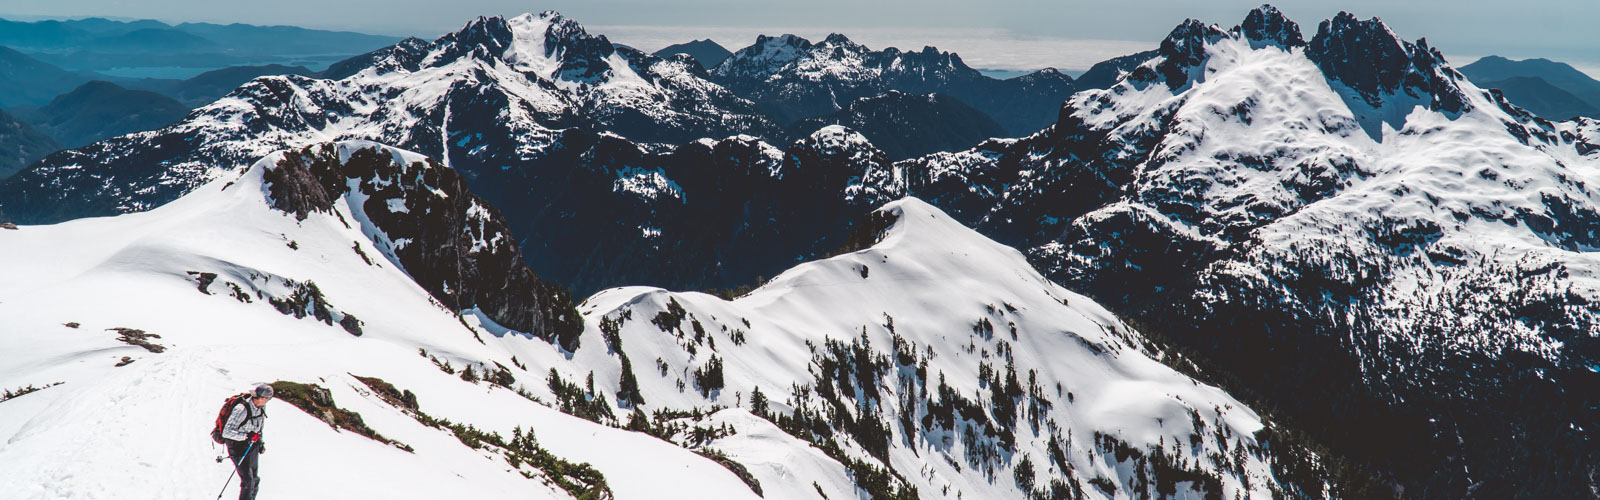 5040 Peak – Hike, Ski or Snowshoe